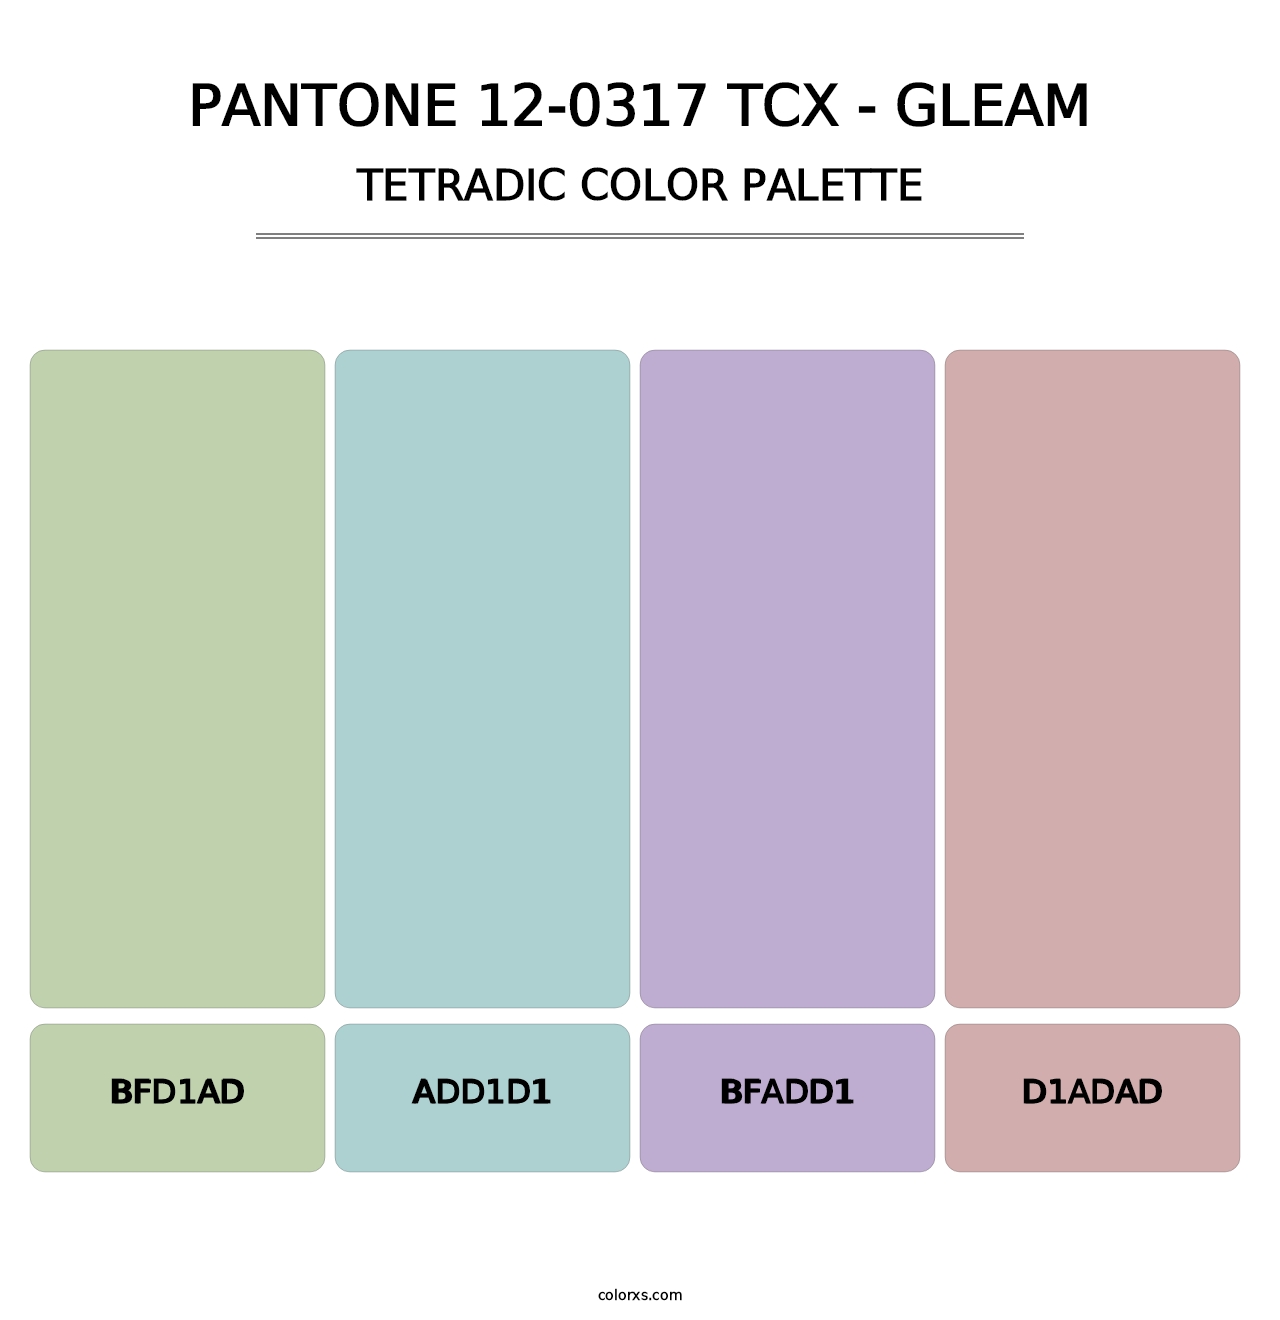 PANTONE 12-0317 TCX - Gleam - Tetradic Color Palette